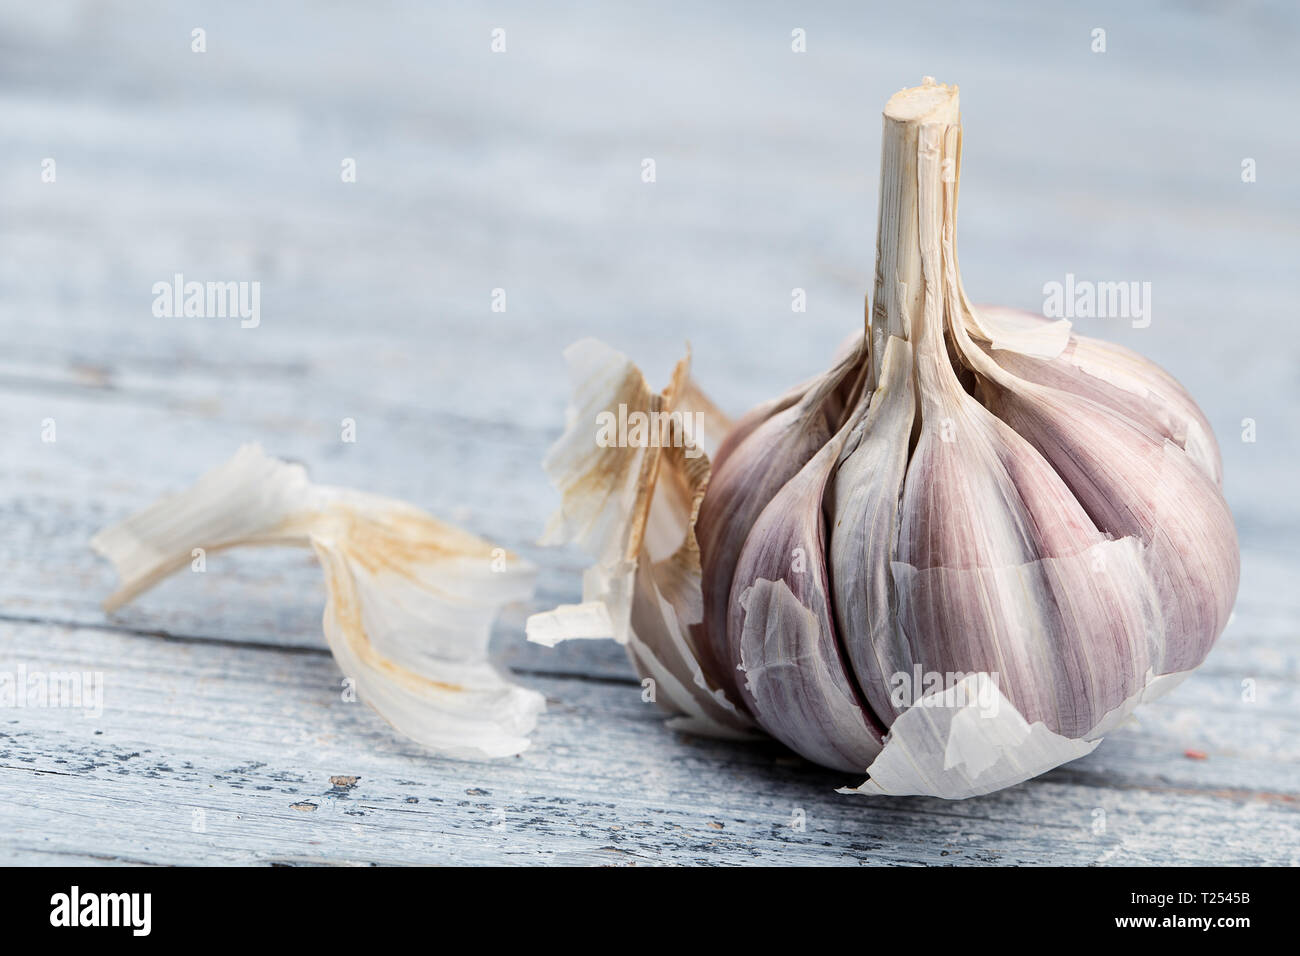 Fresh whole Garlic Bulb on wooden board Stock Photo